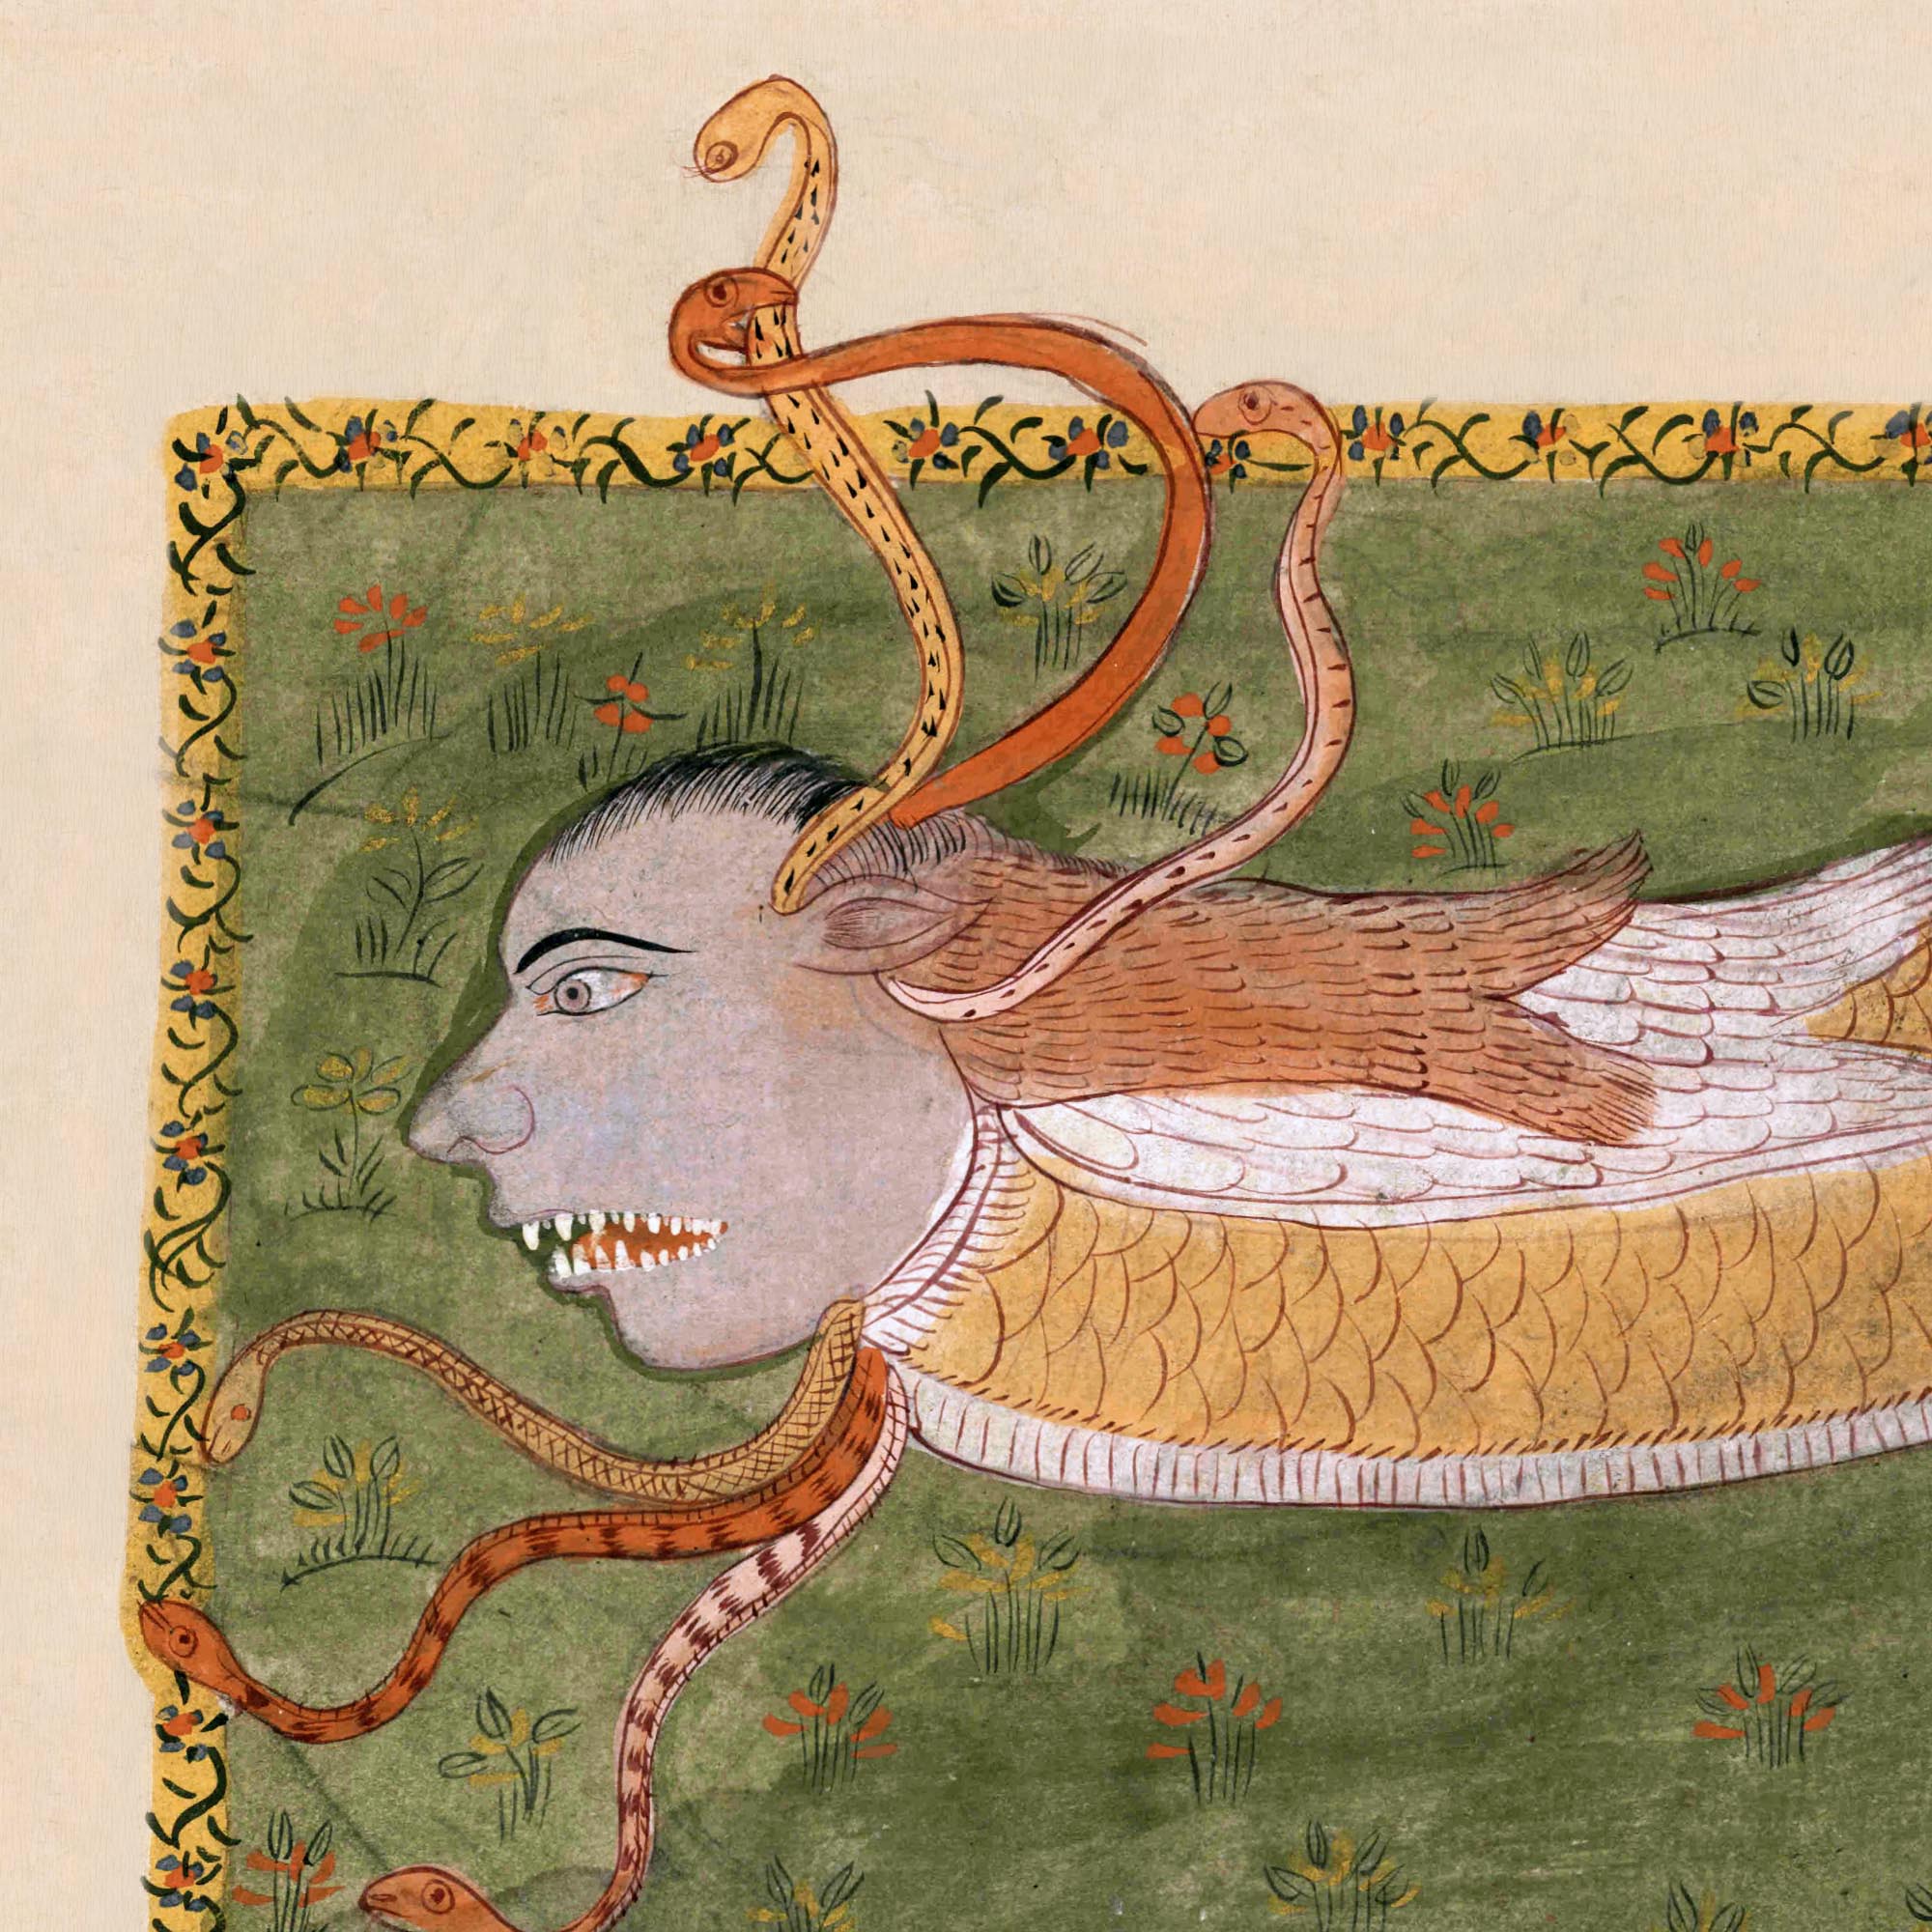 giclee The Book of Wonders (Fish Djinn) Persian Mythology Muslim Sufi Islamic Art | Surreal, Fantasy Folklore Fine Art Print